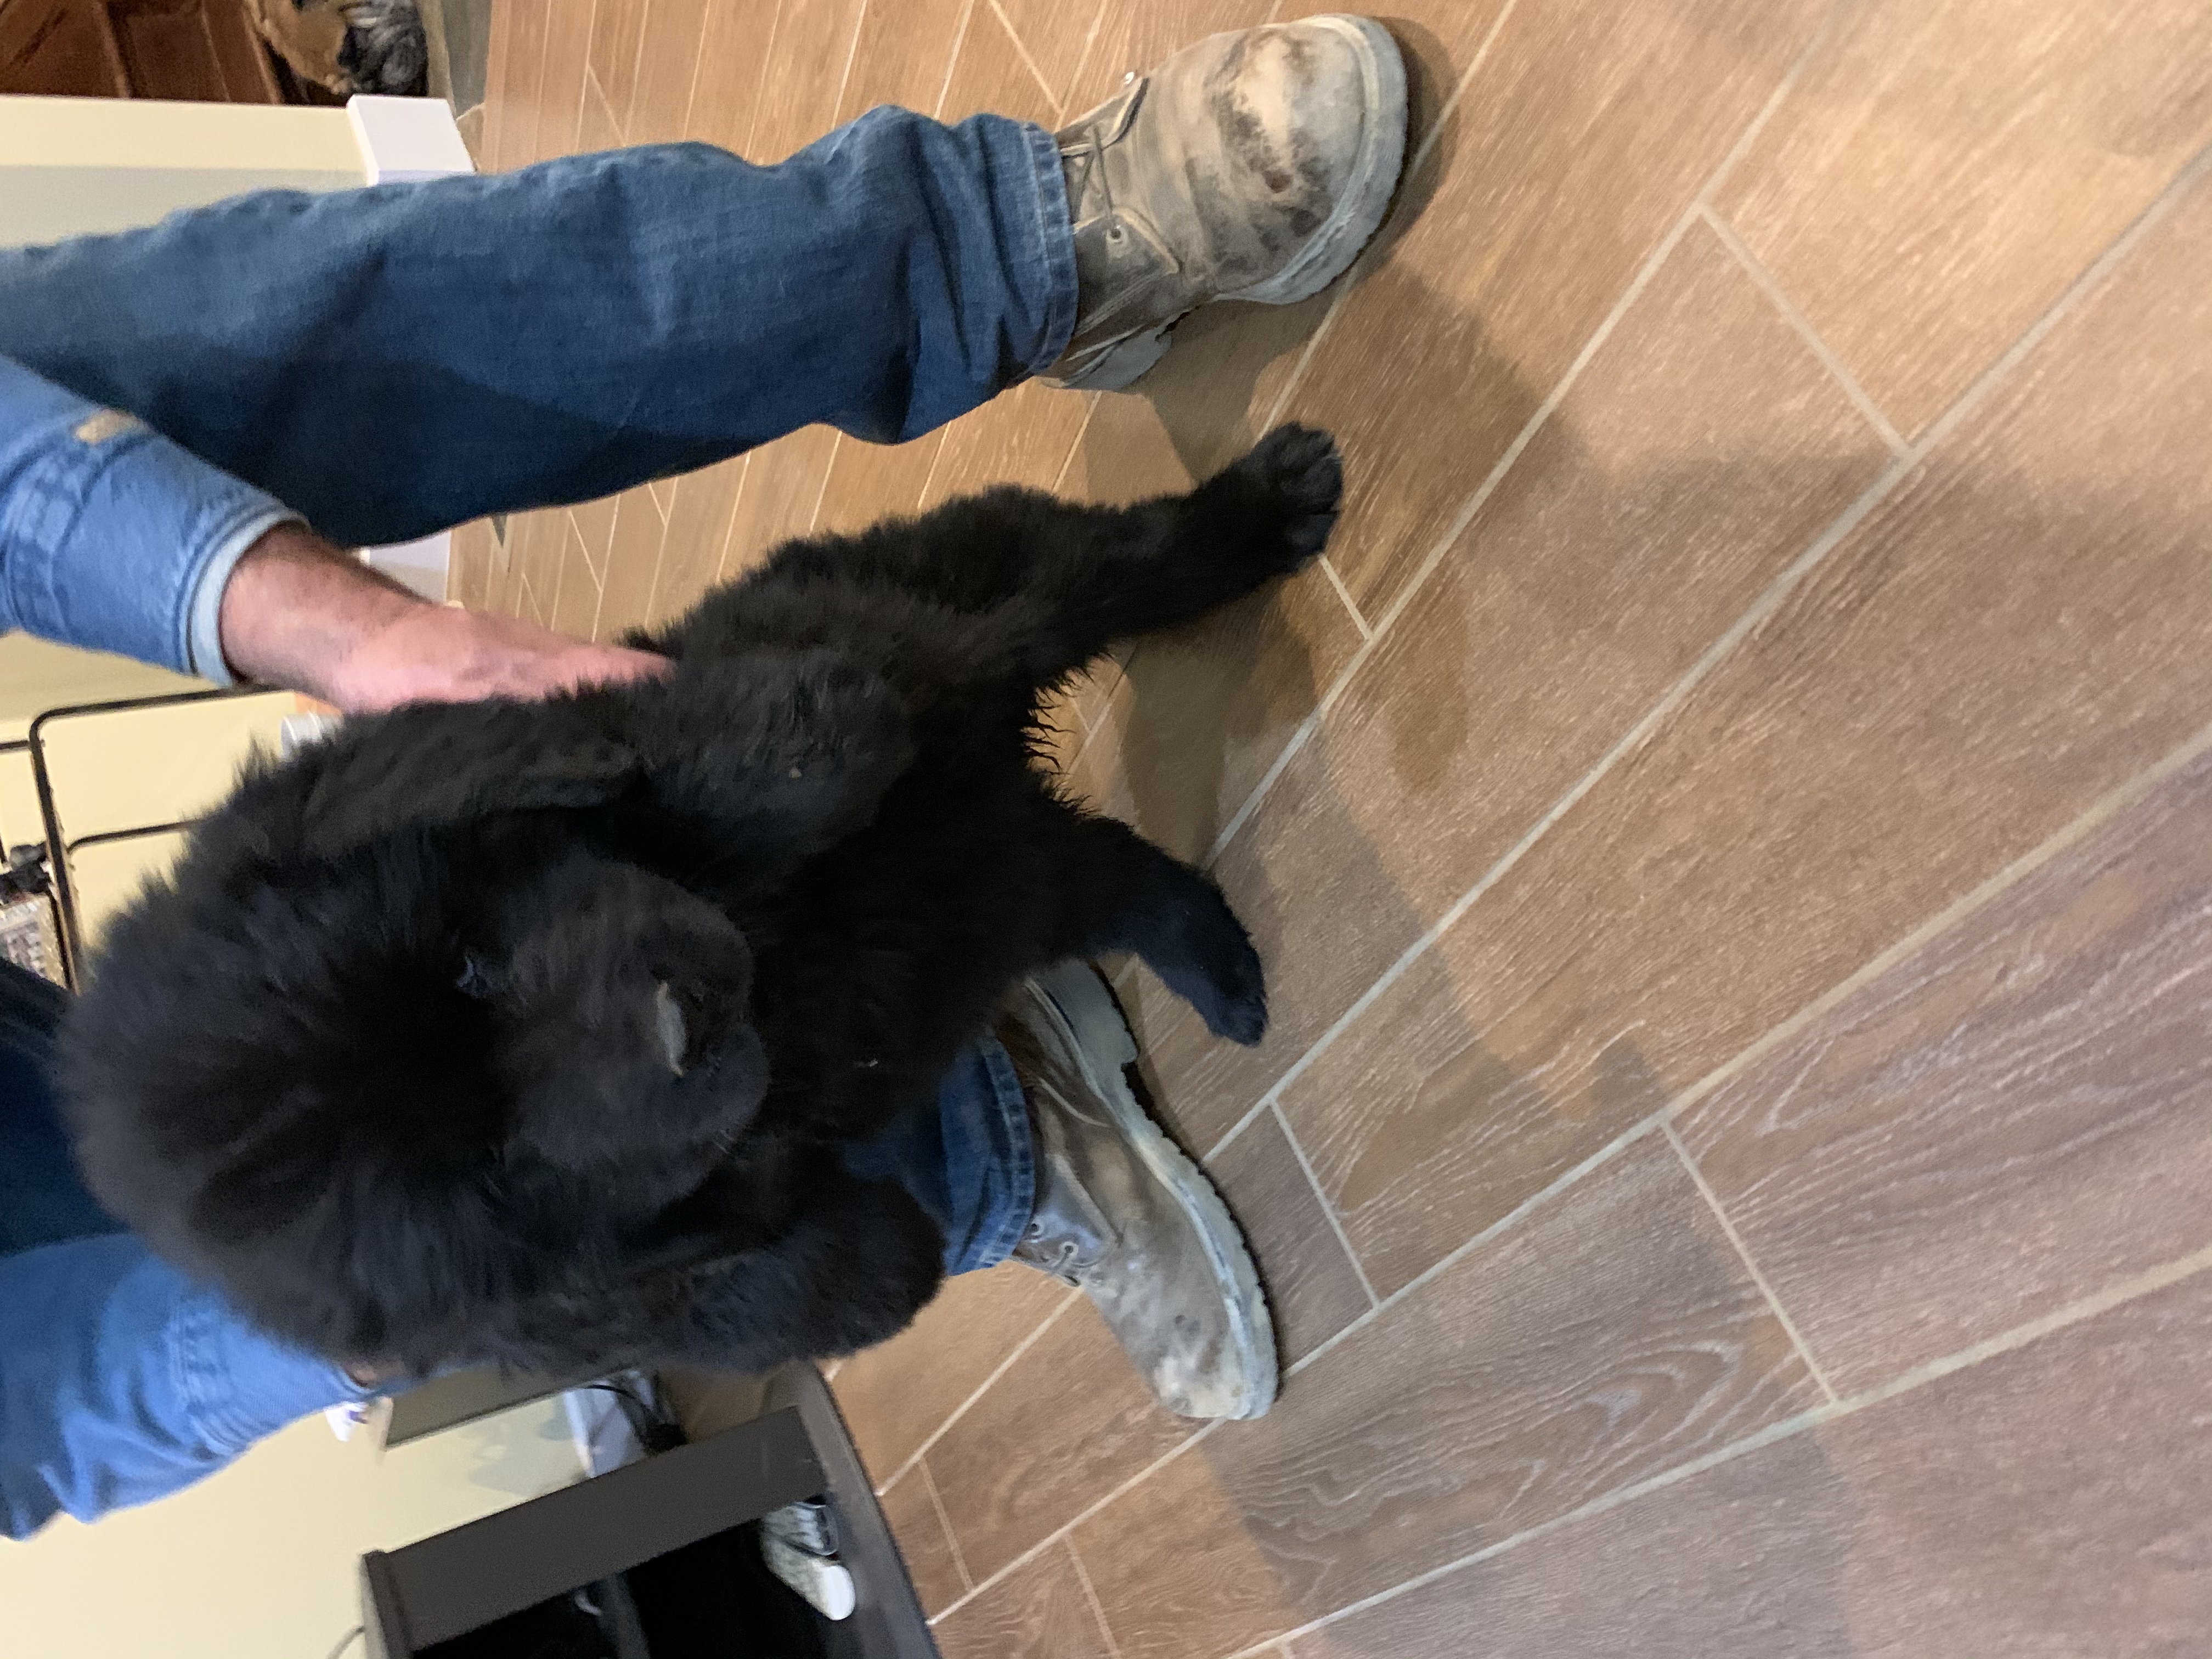 Owner holding up Newfoundland puppy